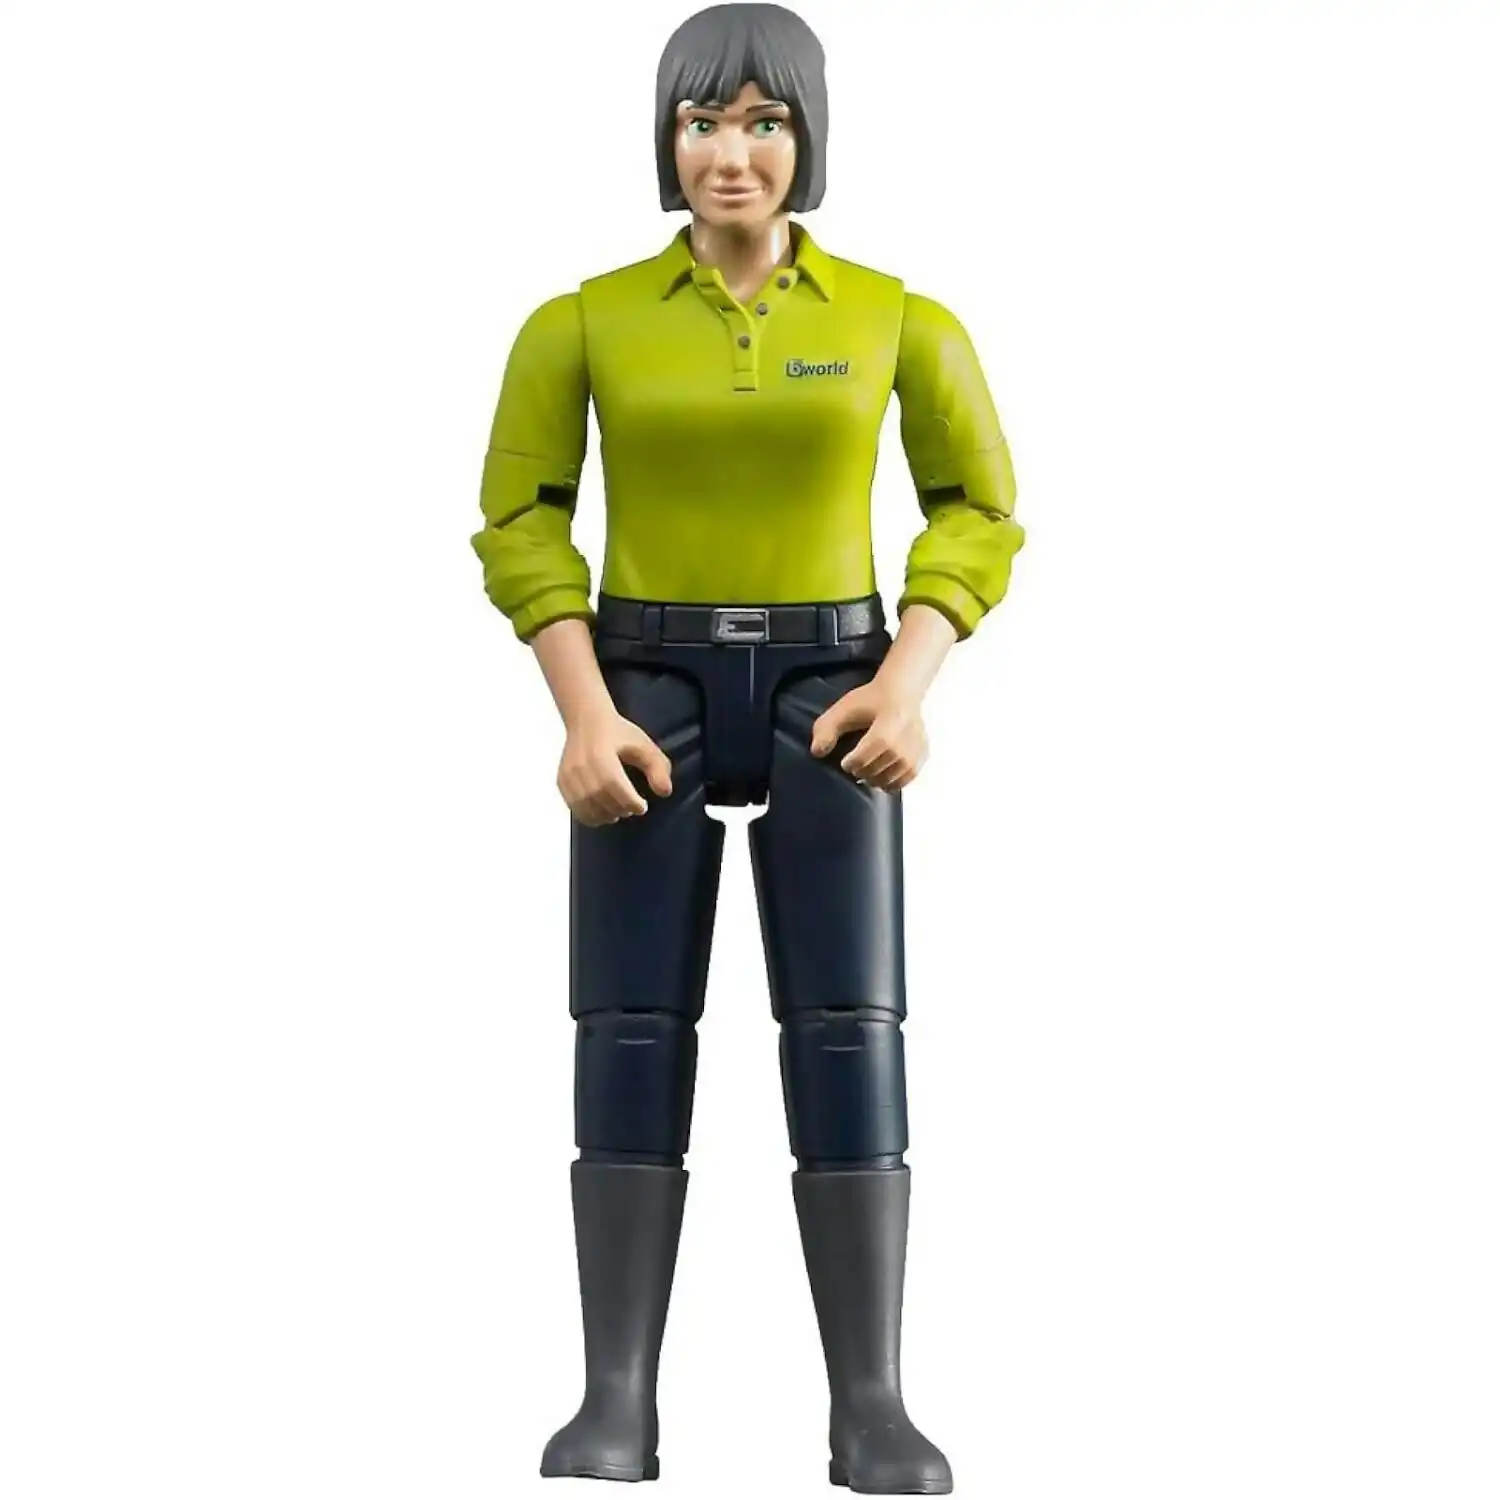 Bruder - Woman With Light Skin Wearing Dark Blue Jeans Figurine